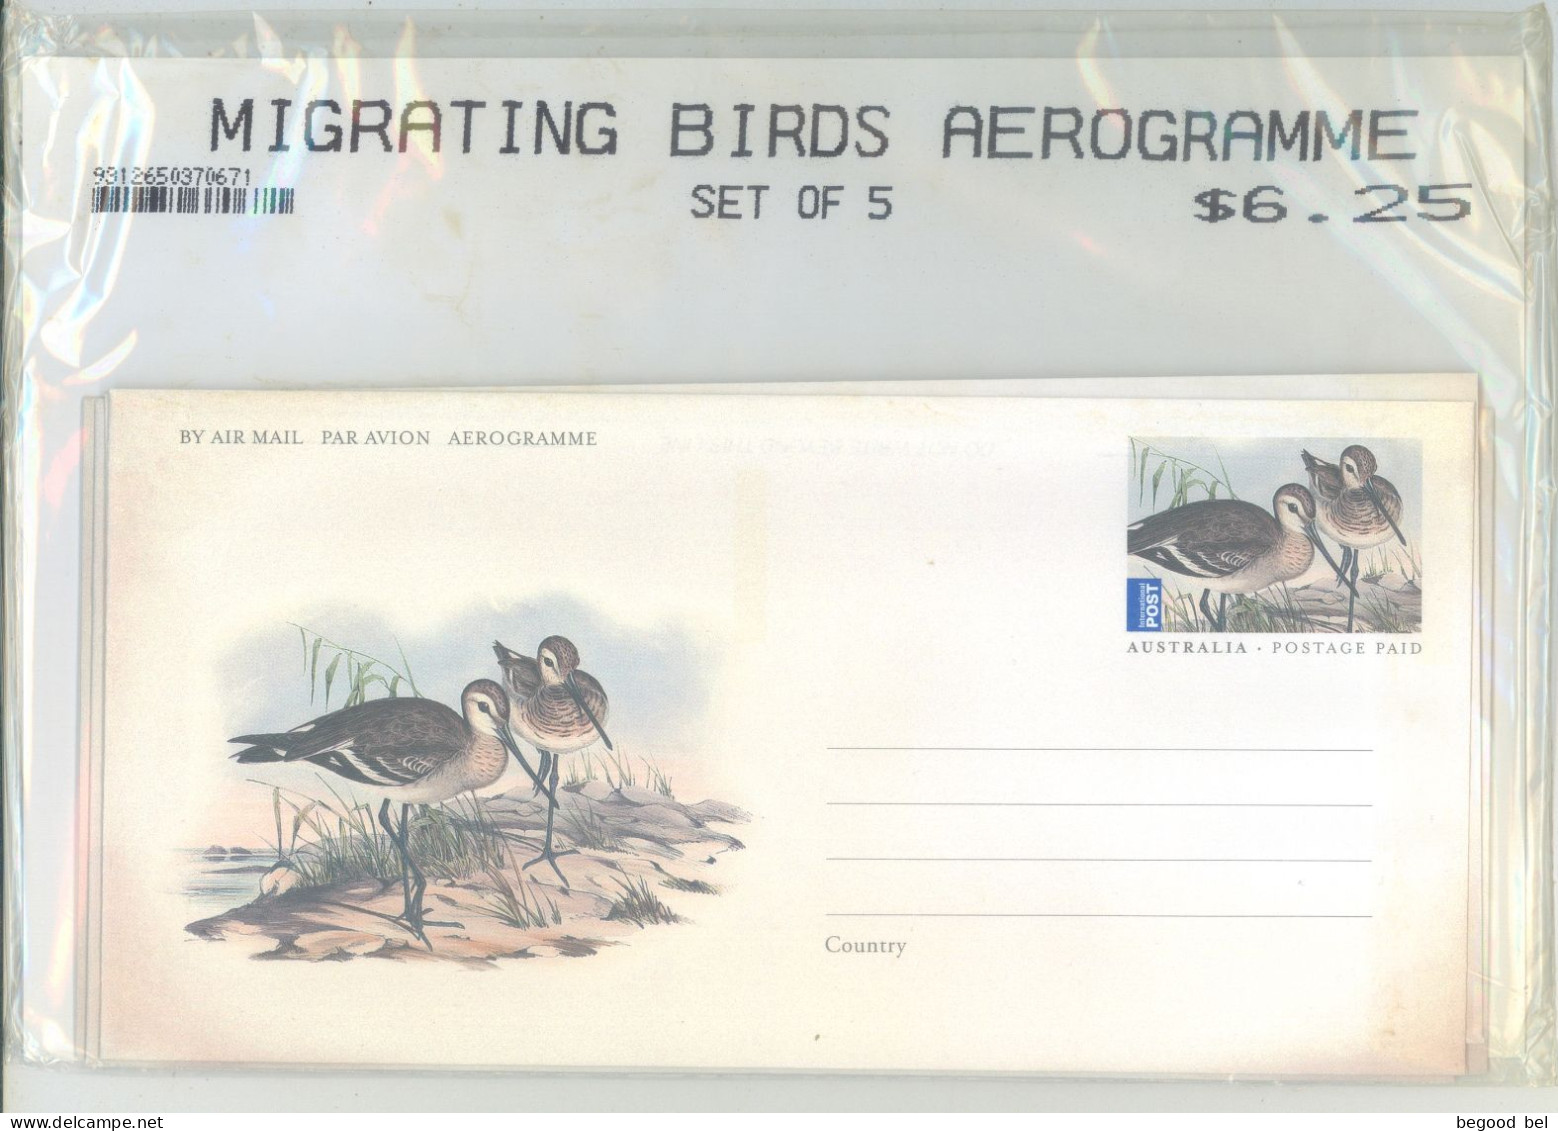 AUSTRALIA - AEROGRAMME COMPLETE SET OF 5 IN THE ORIGINAL ENCLOSED PACKAGING - 2009 - MIGRATING BIRDS -  Lot 25752 - Luchtpostbladen